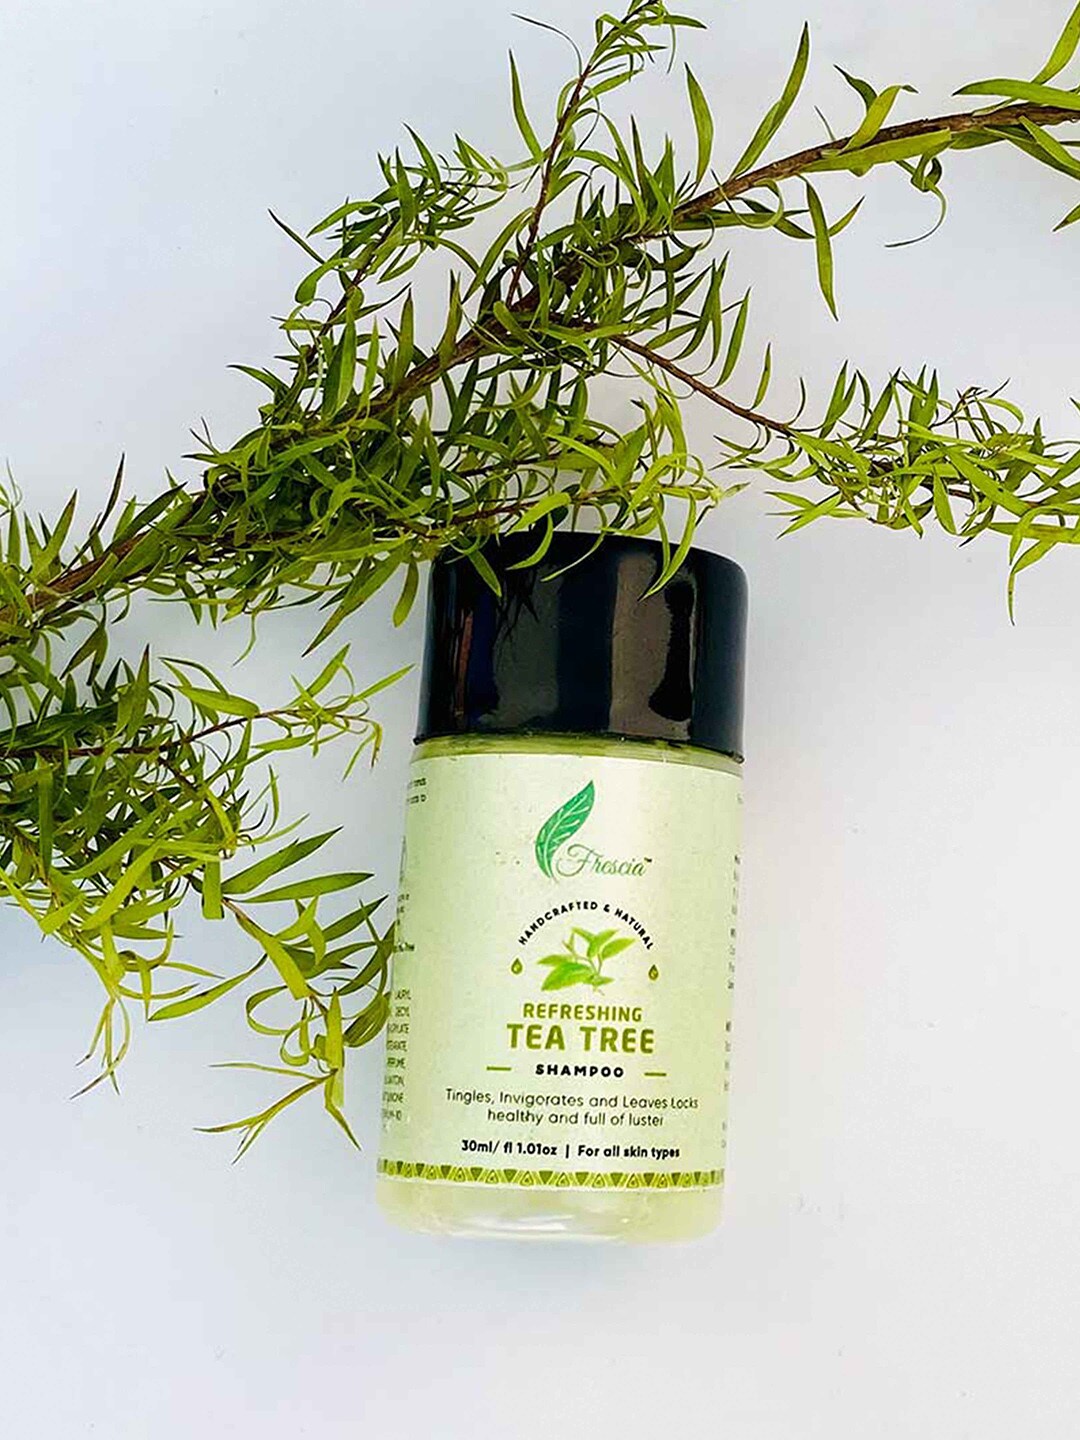 Frescia Green Tea Tree Shampoo 30 Ml Price in India